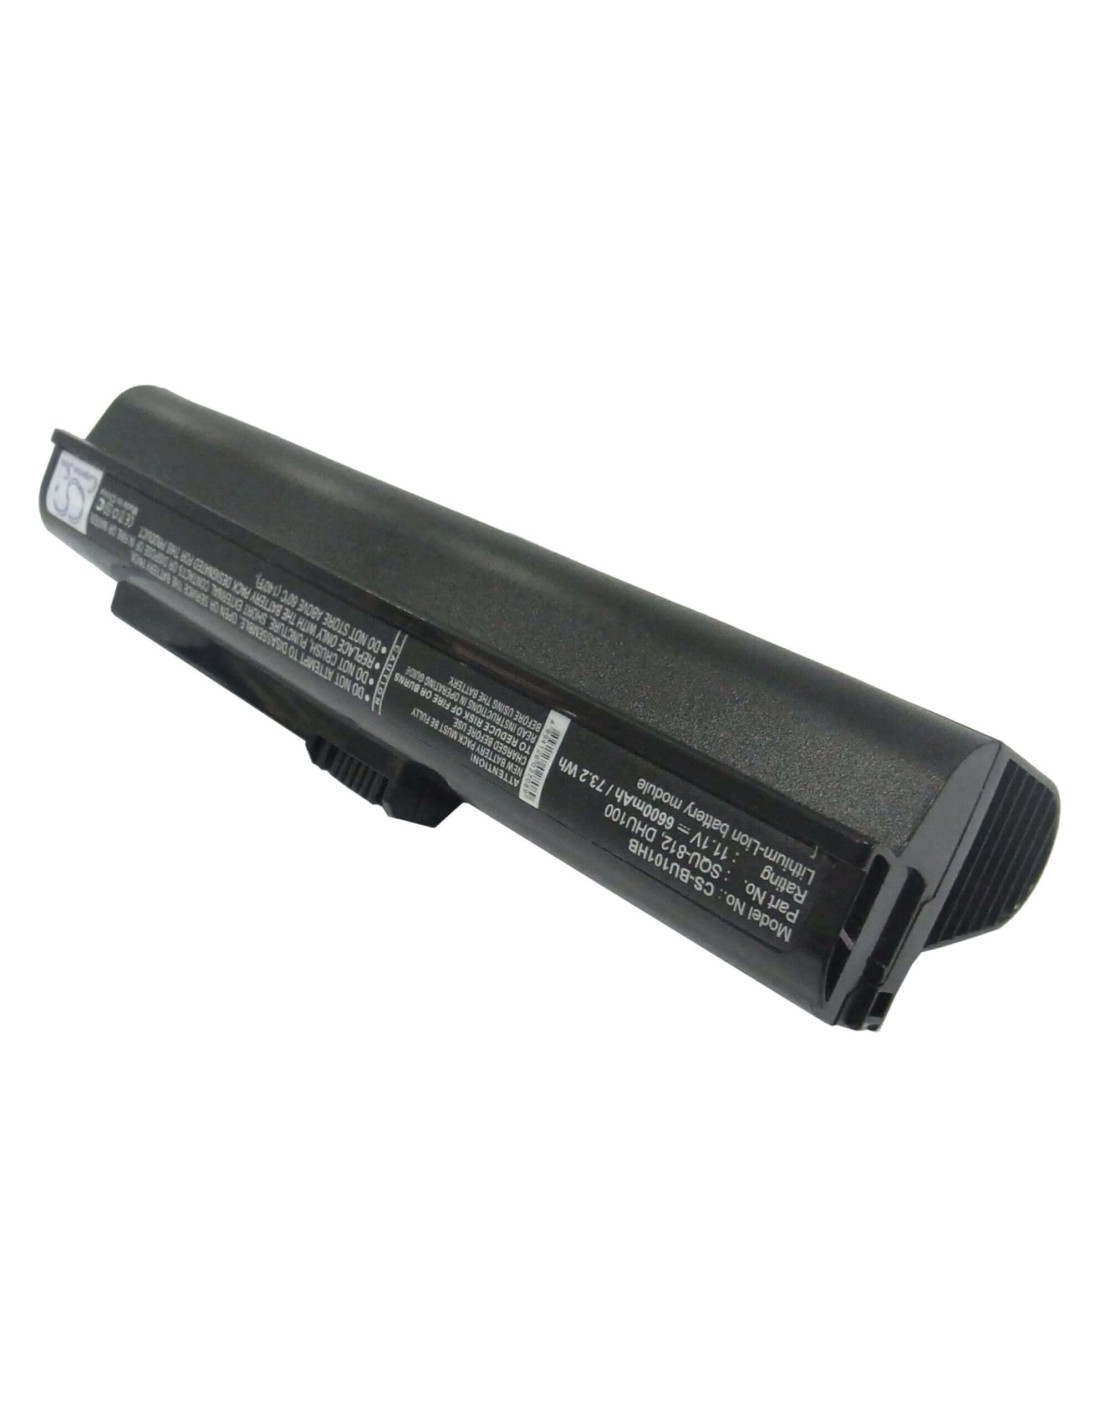 Black Battery for Benq Joybook Lite U101, Joybook Lite U101-v01 11.1V, 6600mAh - 73.26Wh